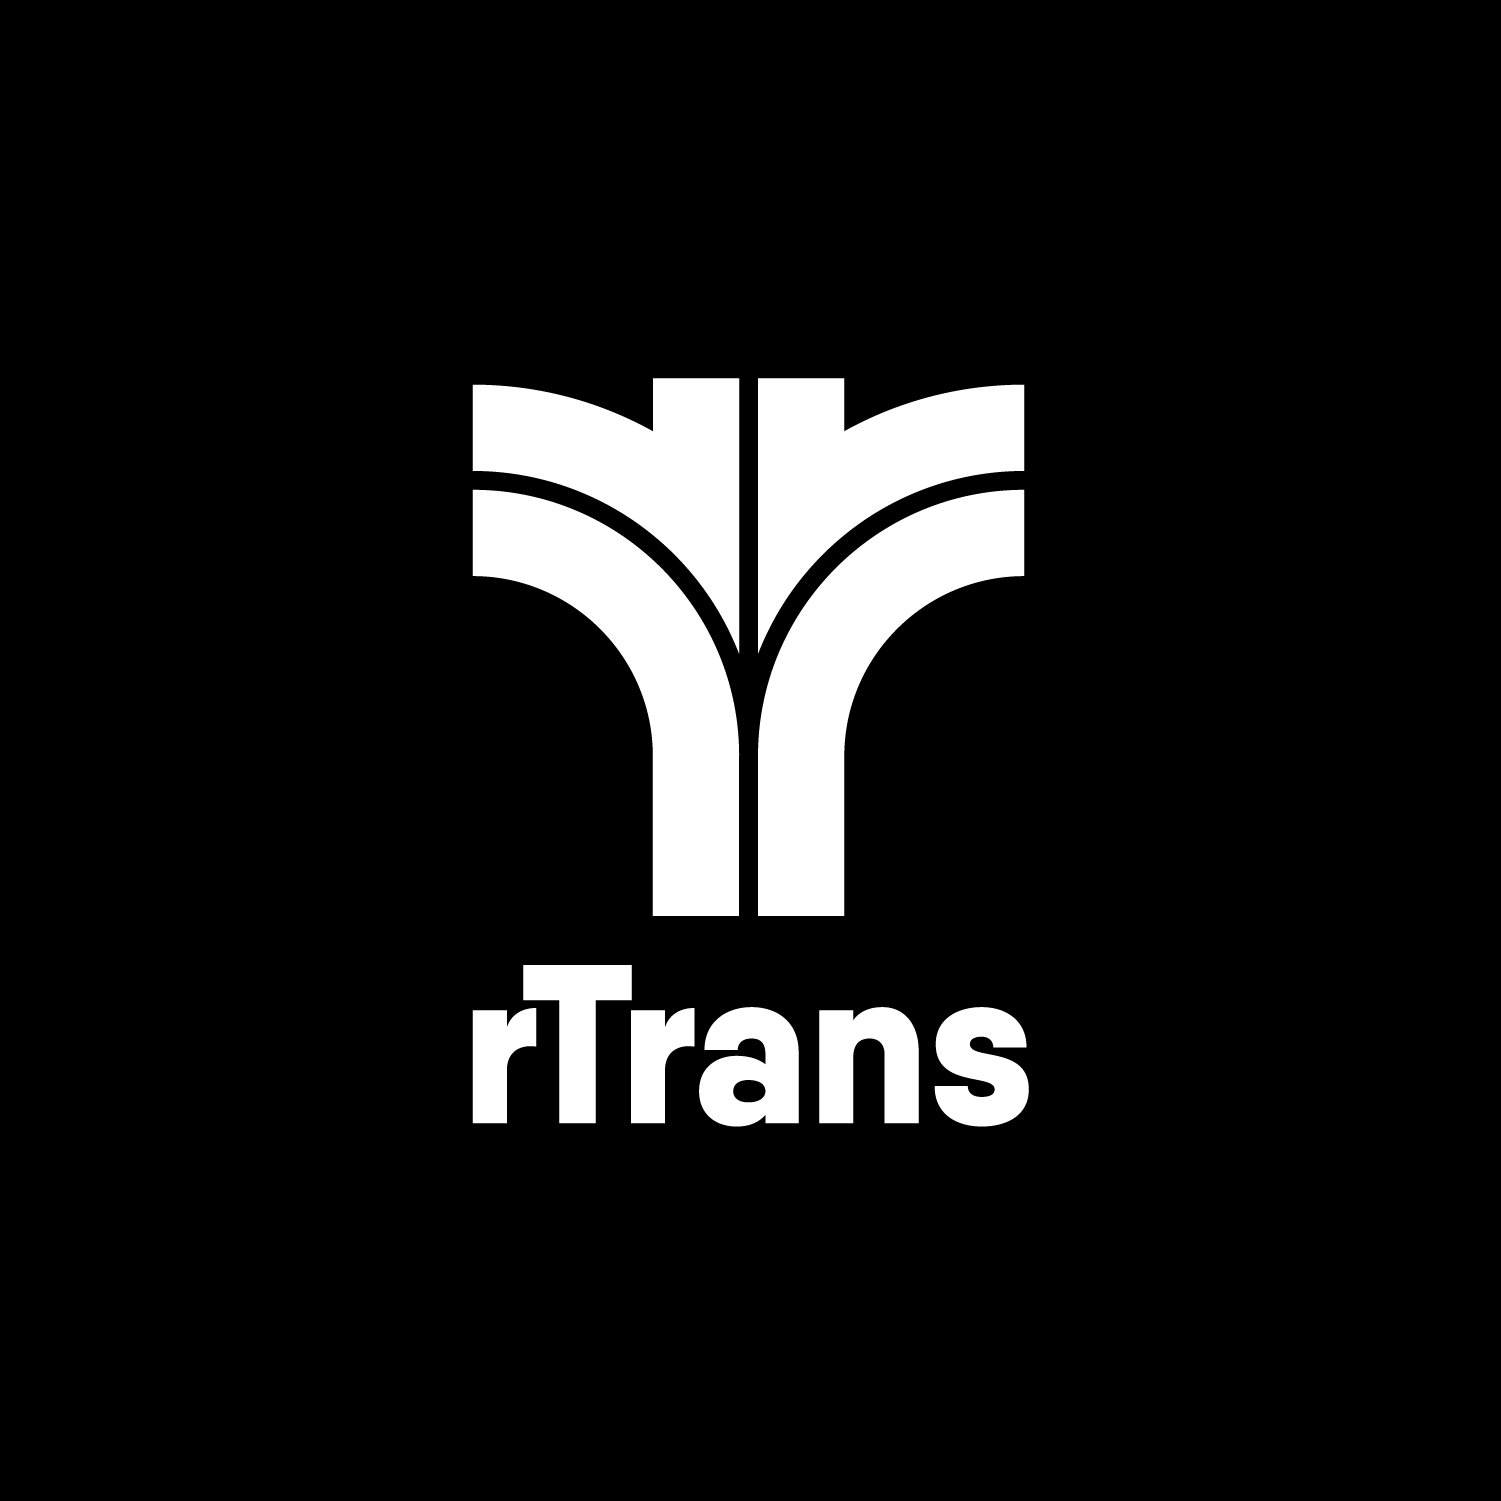 rTrans